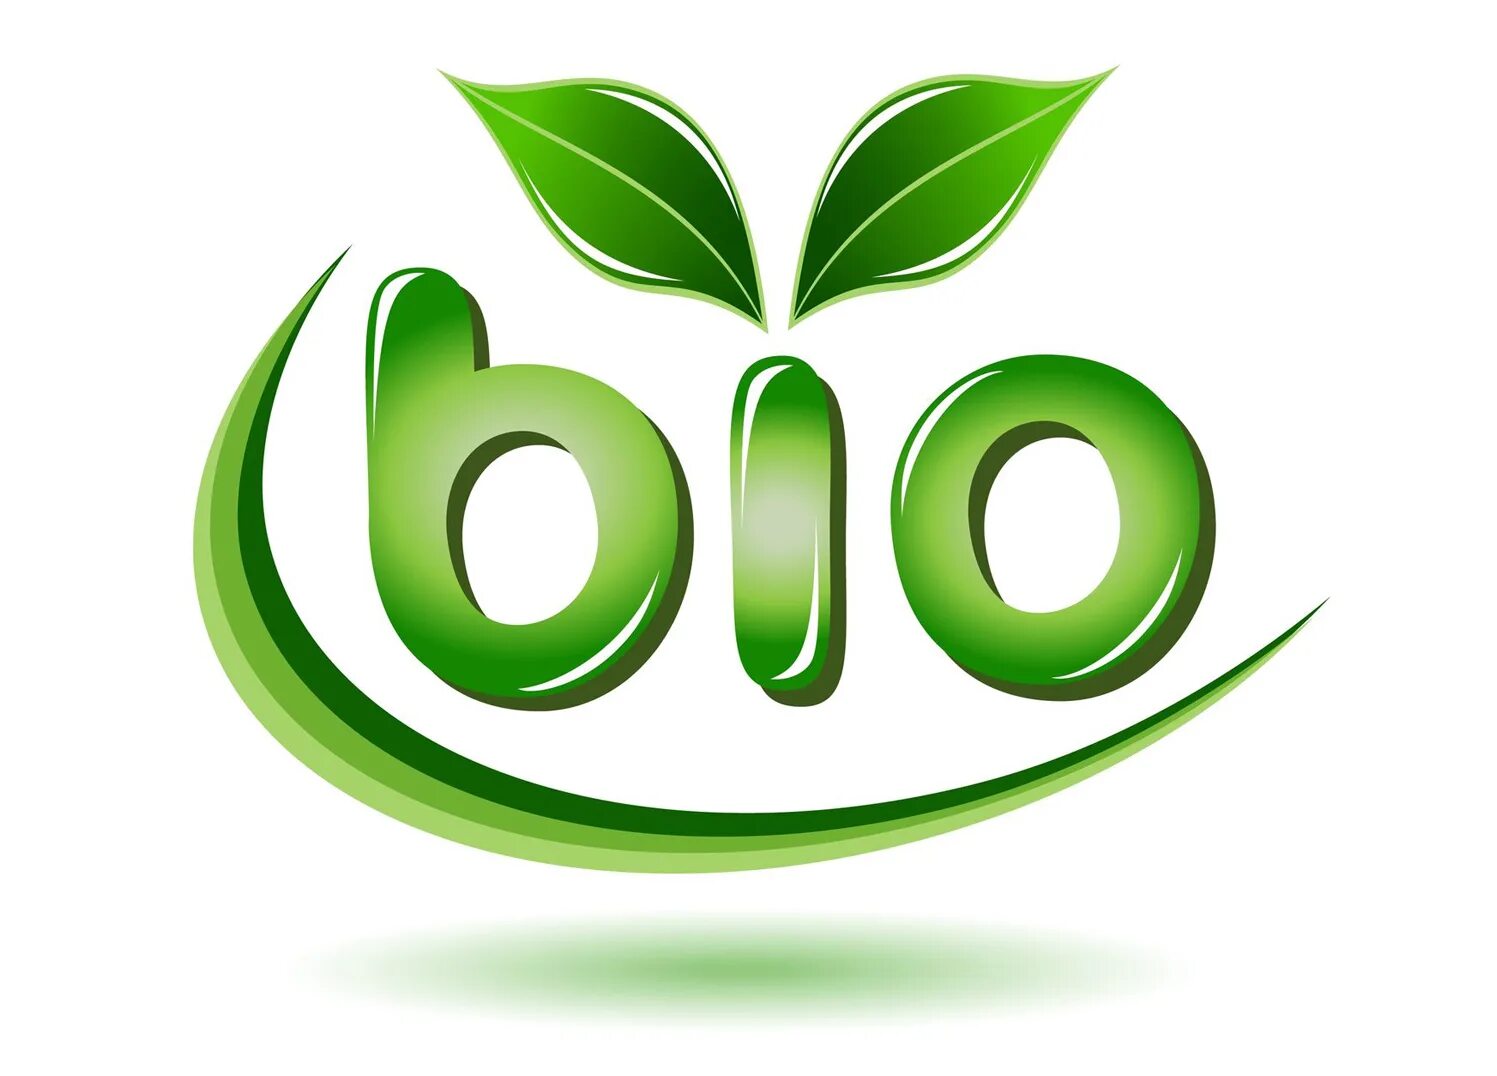 Bio natural. Био Органик лого. Значок Bio. Значок био эко. 100% Био значок.